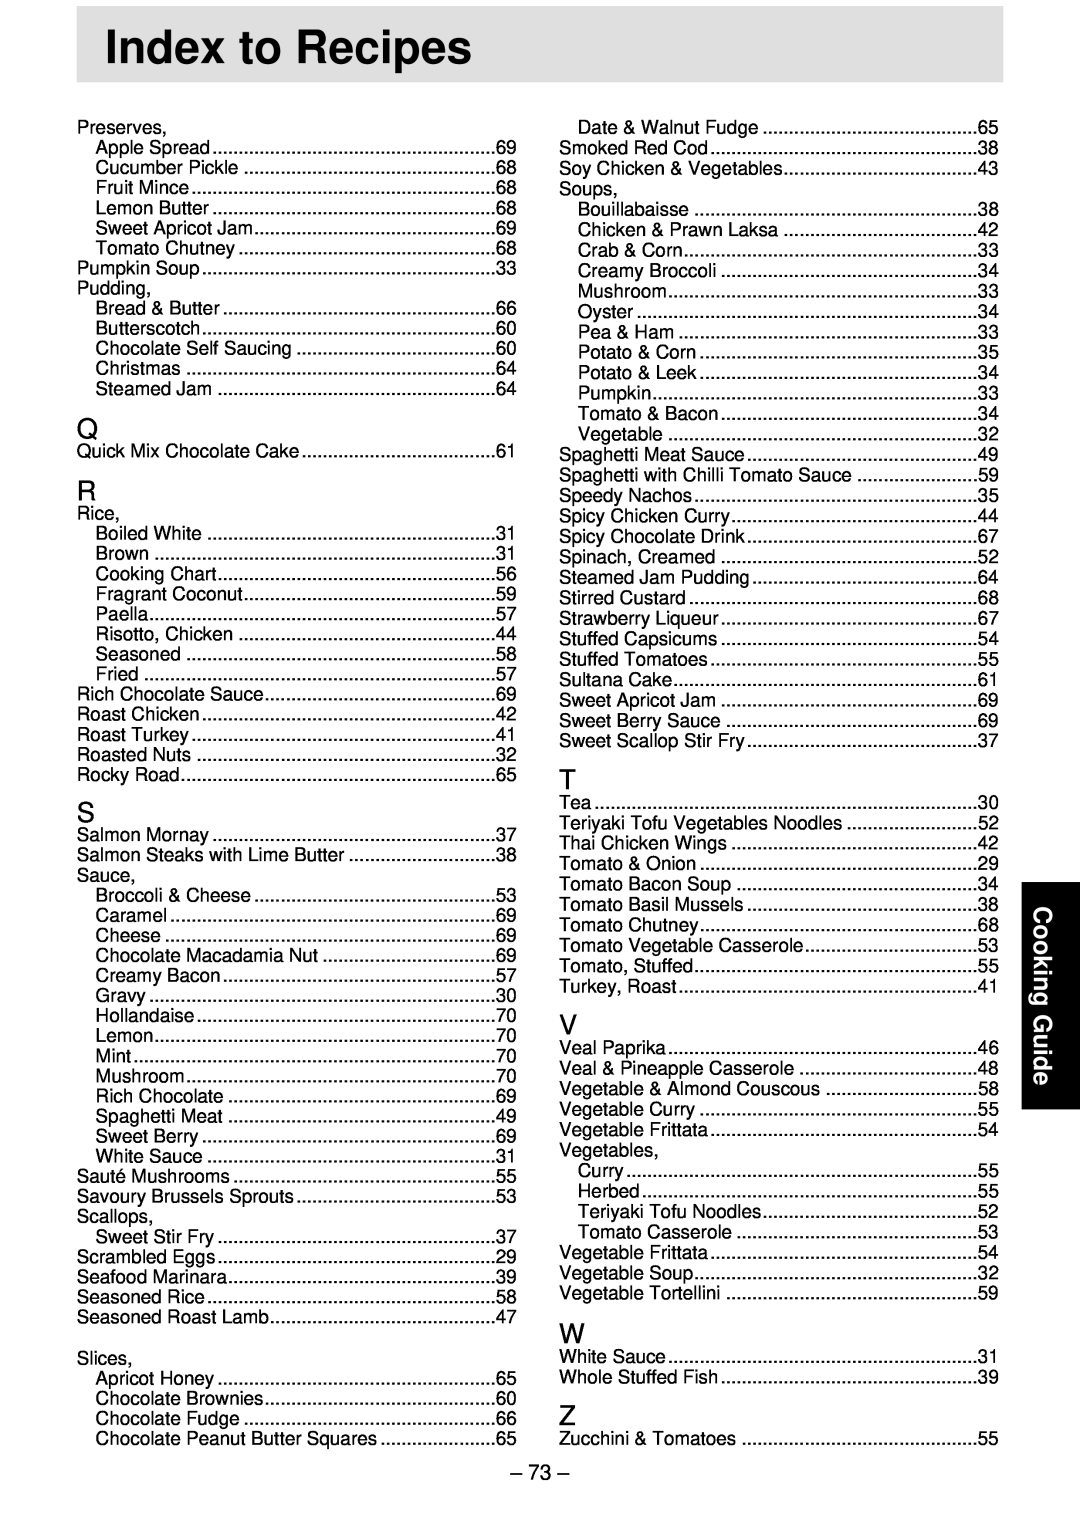 Panasonic NN-T791, NN-S761, NN-S781 manual Index to Recipes, Cooking Guide 